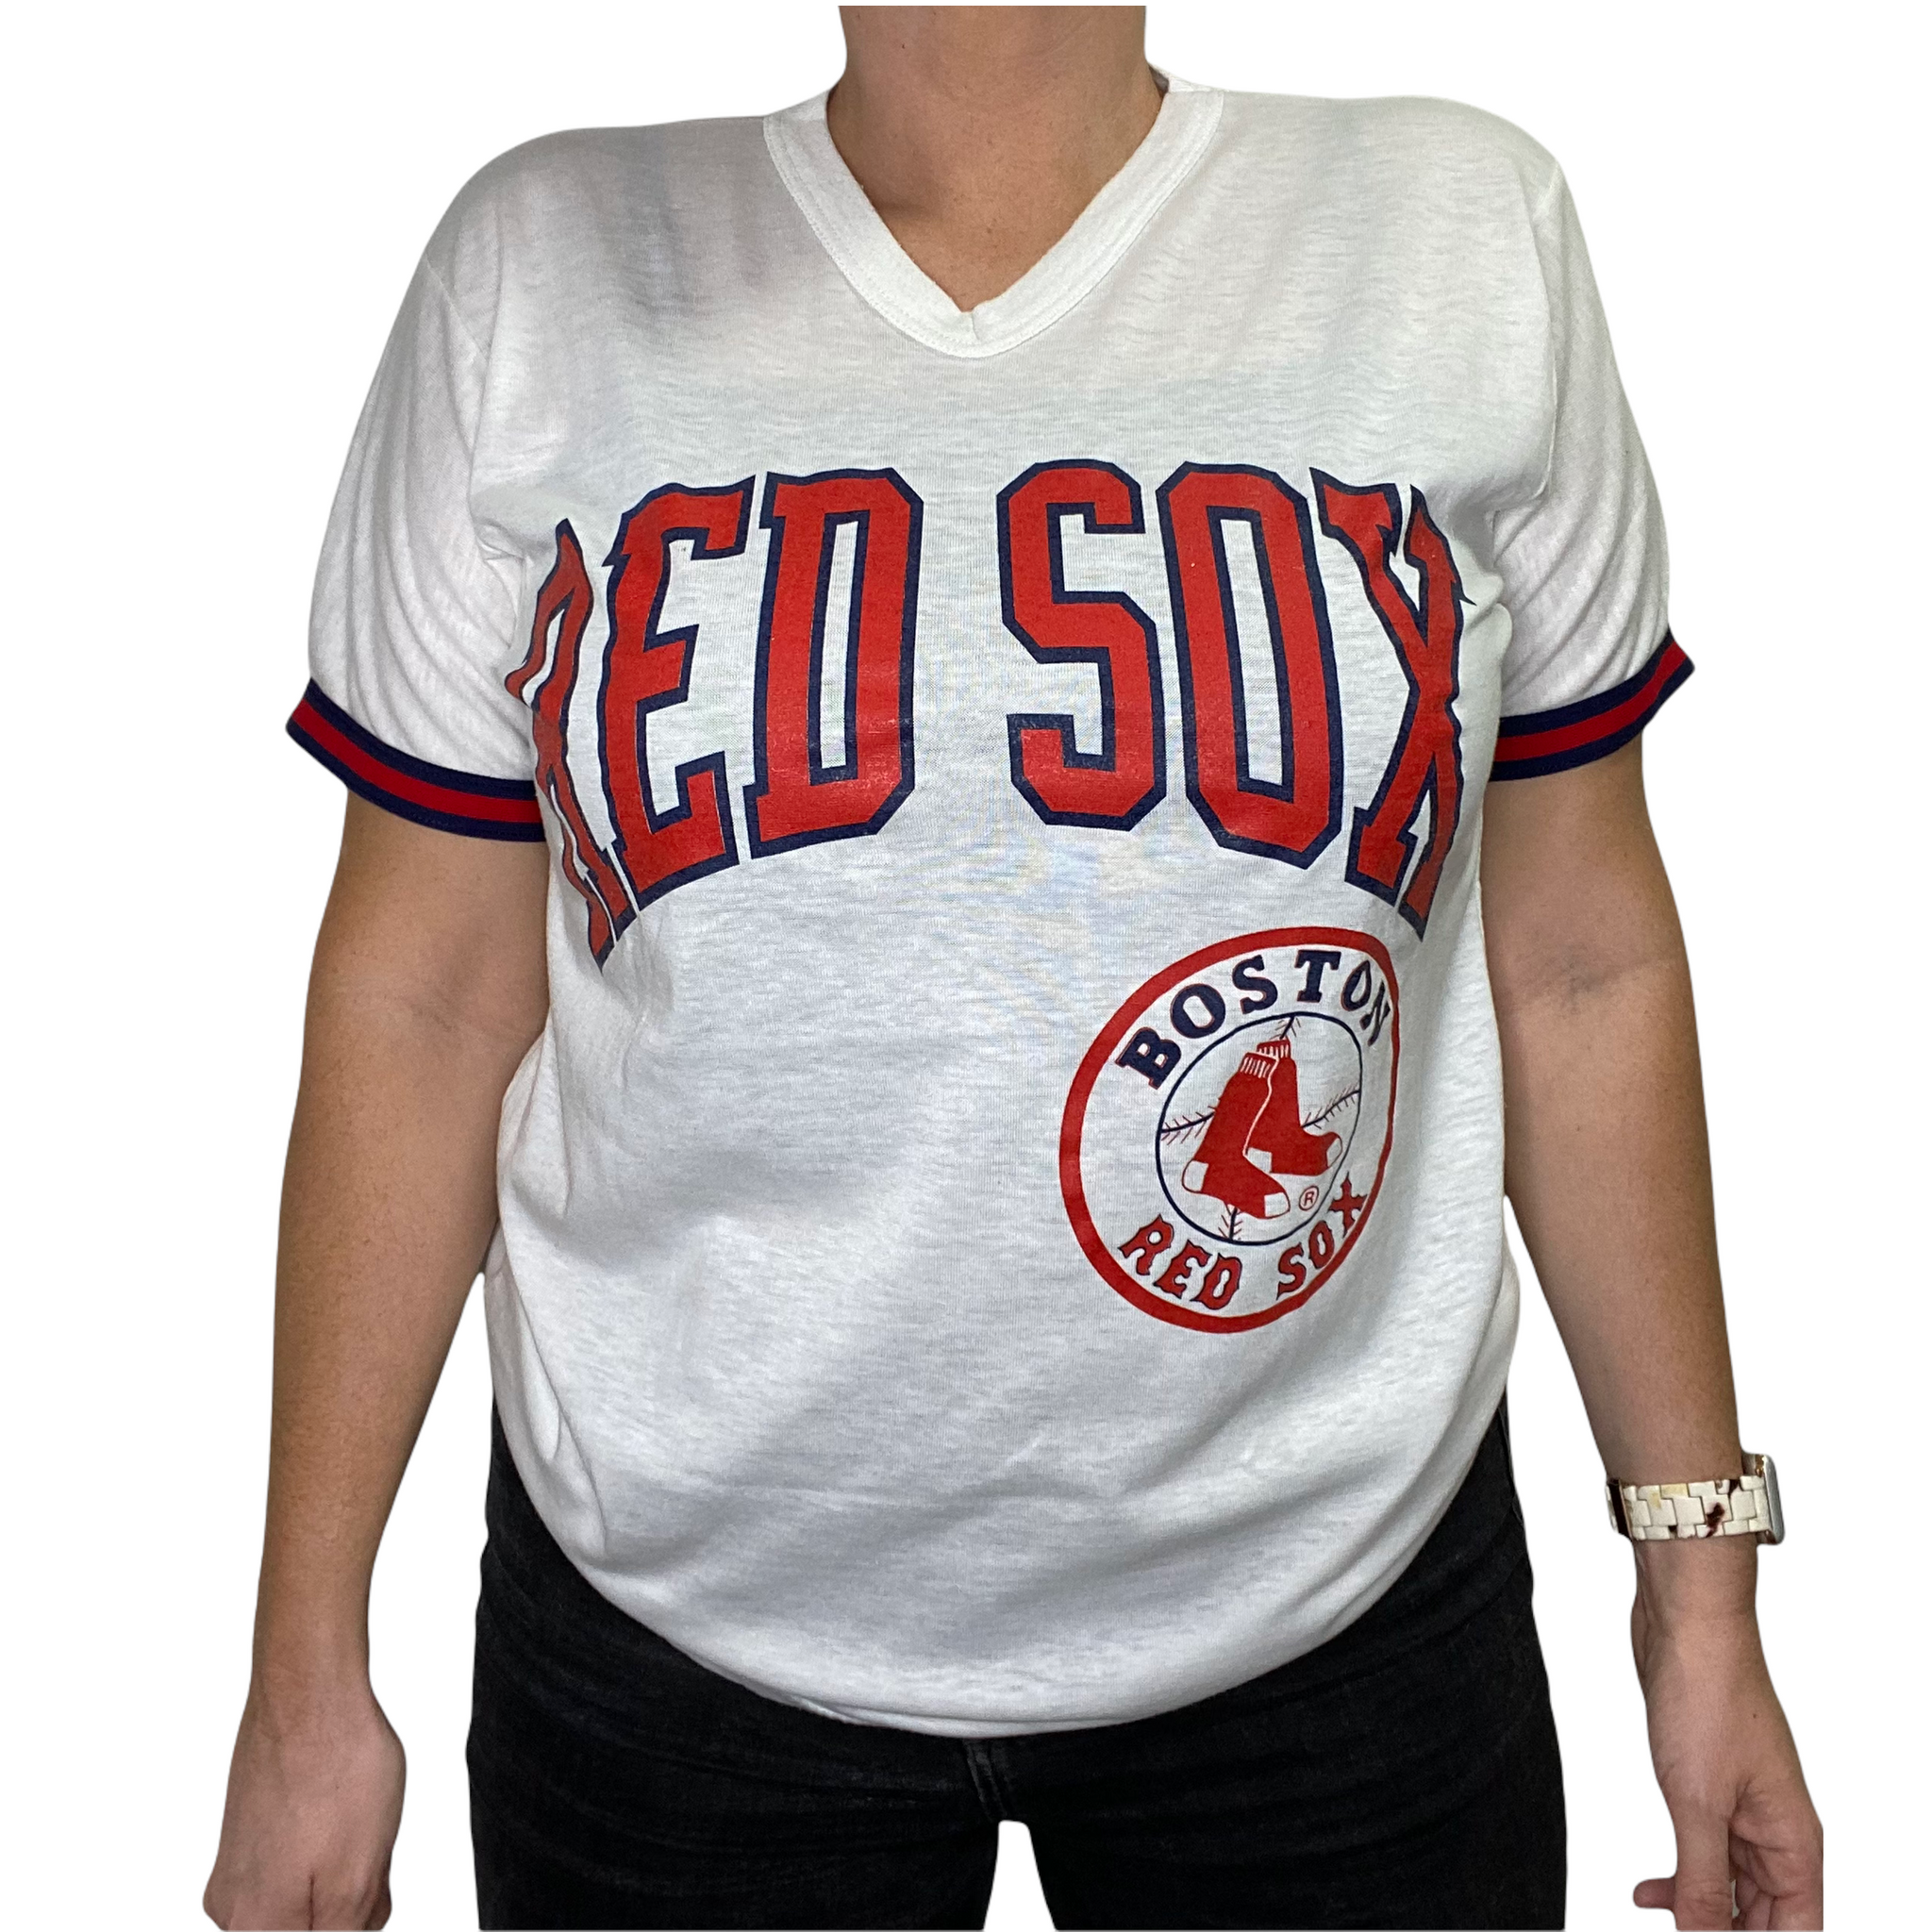 Vintage 1999 Boston Red Sox Jersey Womens Small/Medium MLB Blue